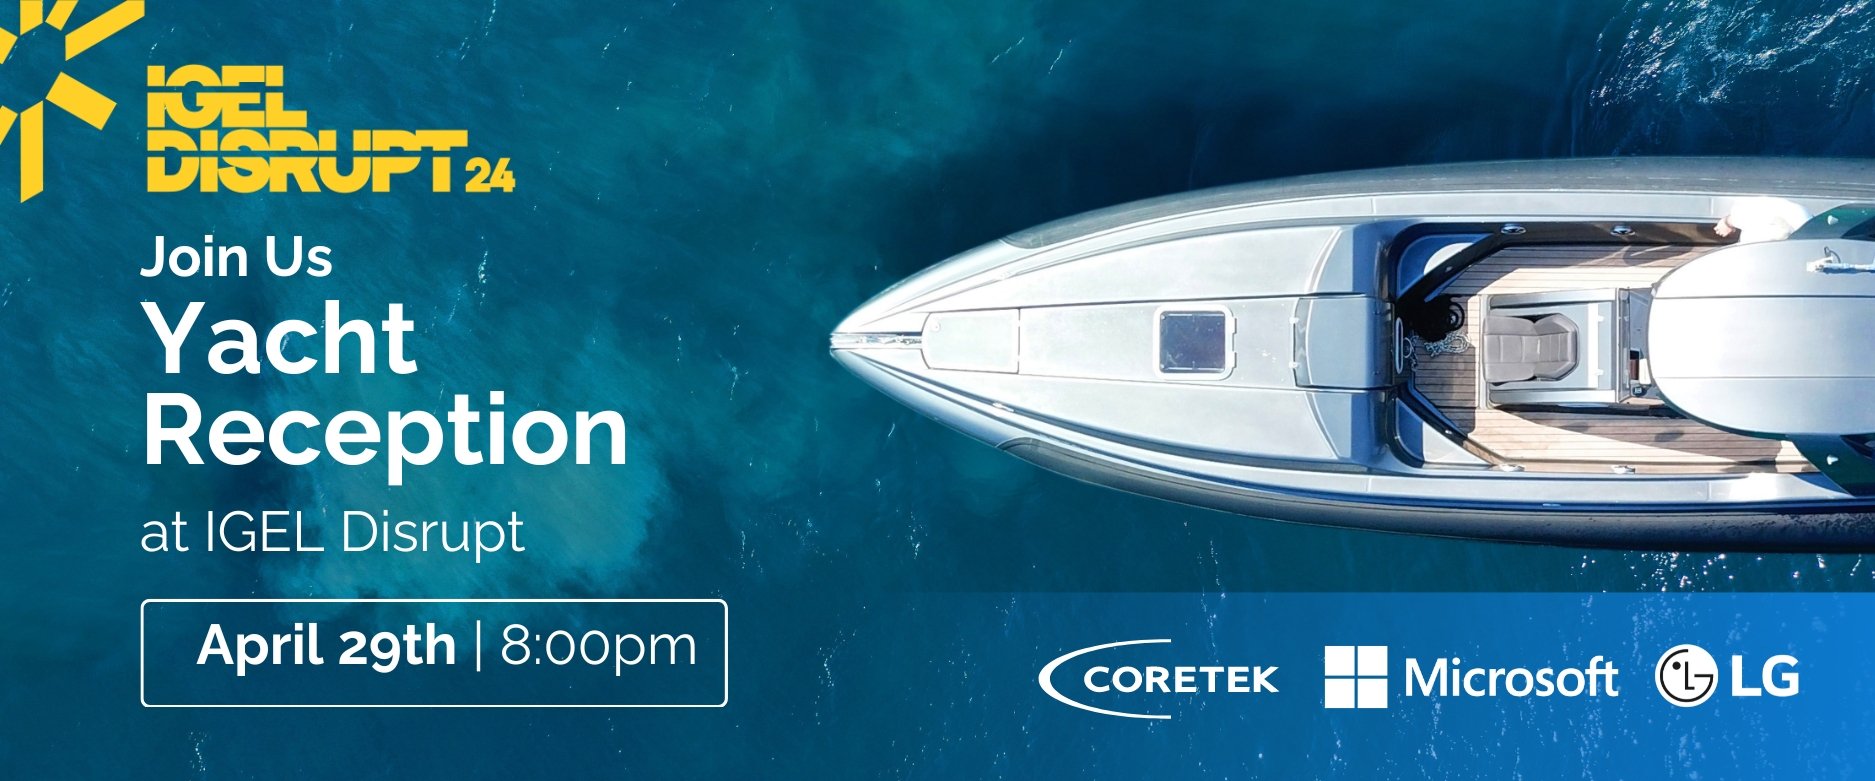 Coretek Yacht Reception at IGEL Disrupt